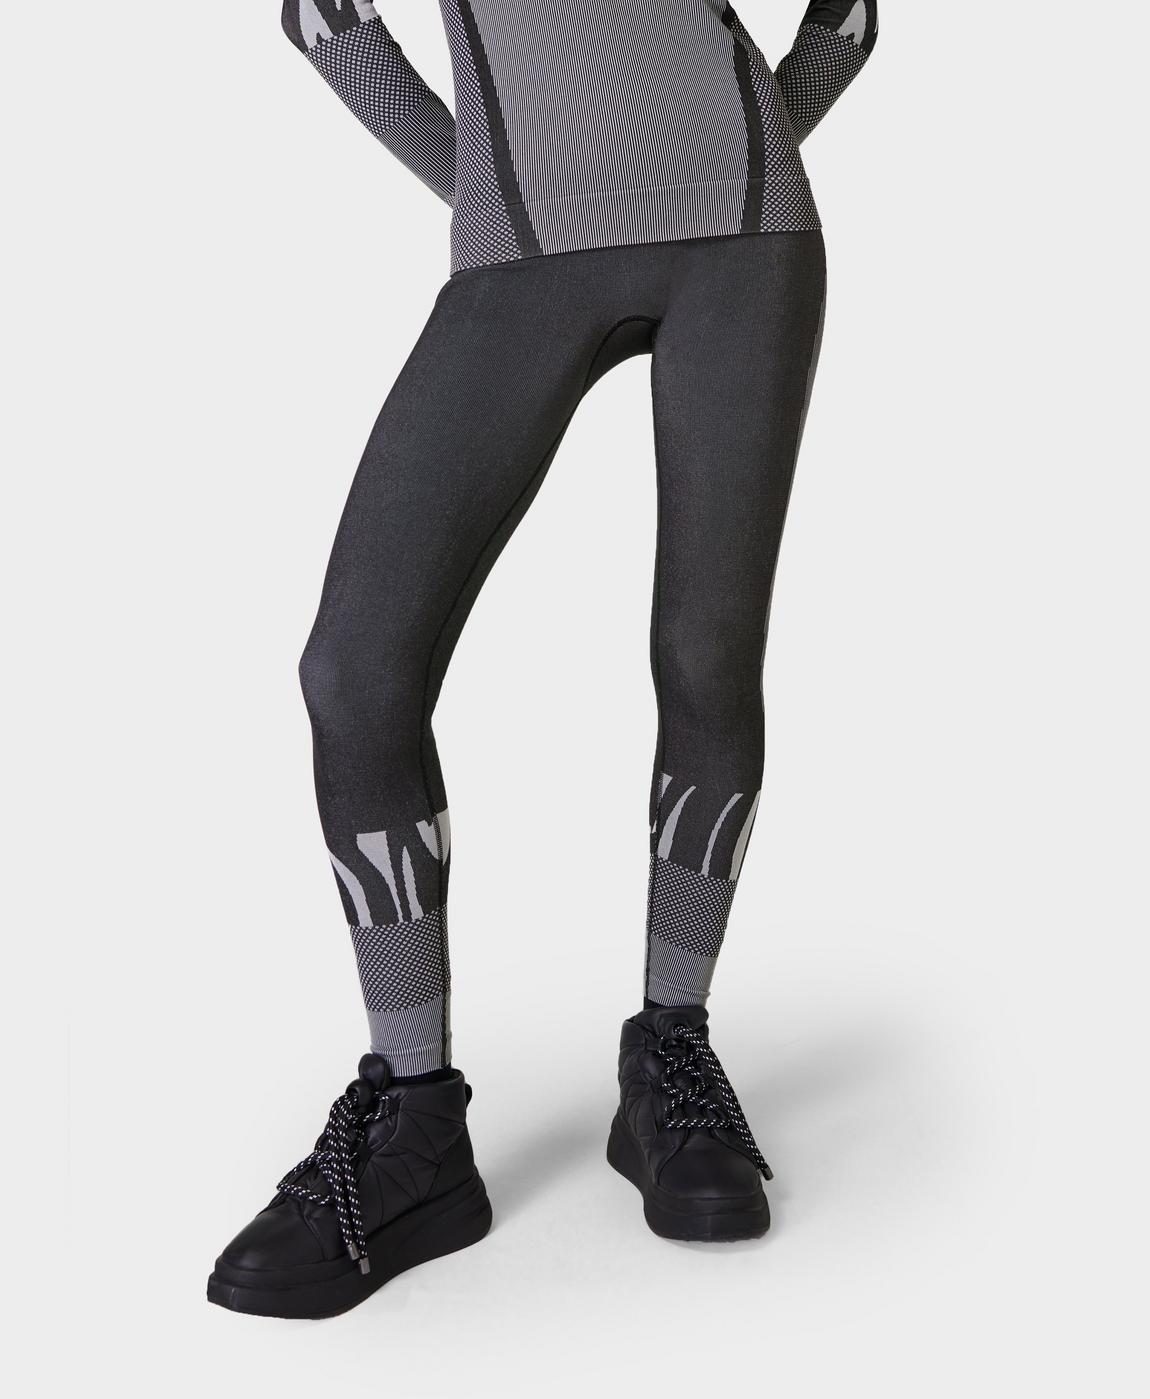 Tech Abstract Base Layer Legging - Black, Women's Ski Clothes